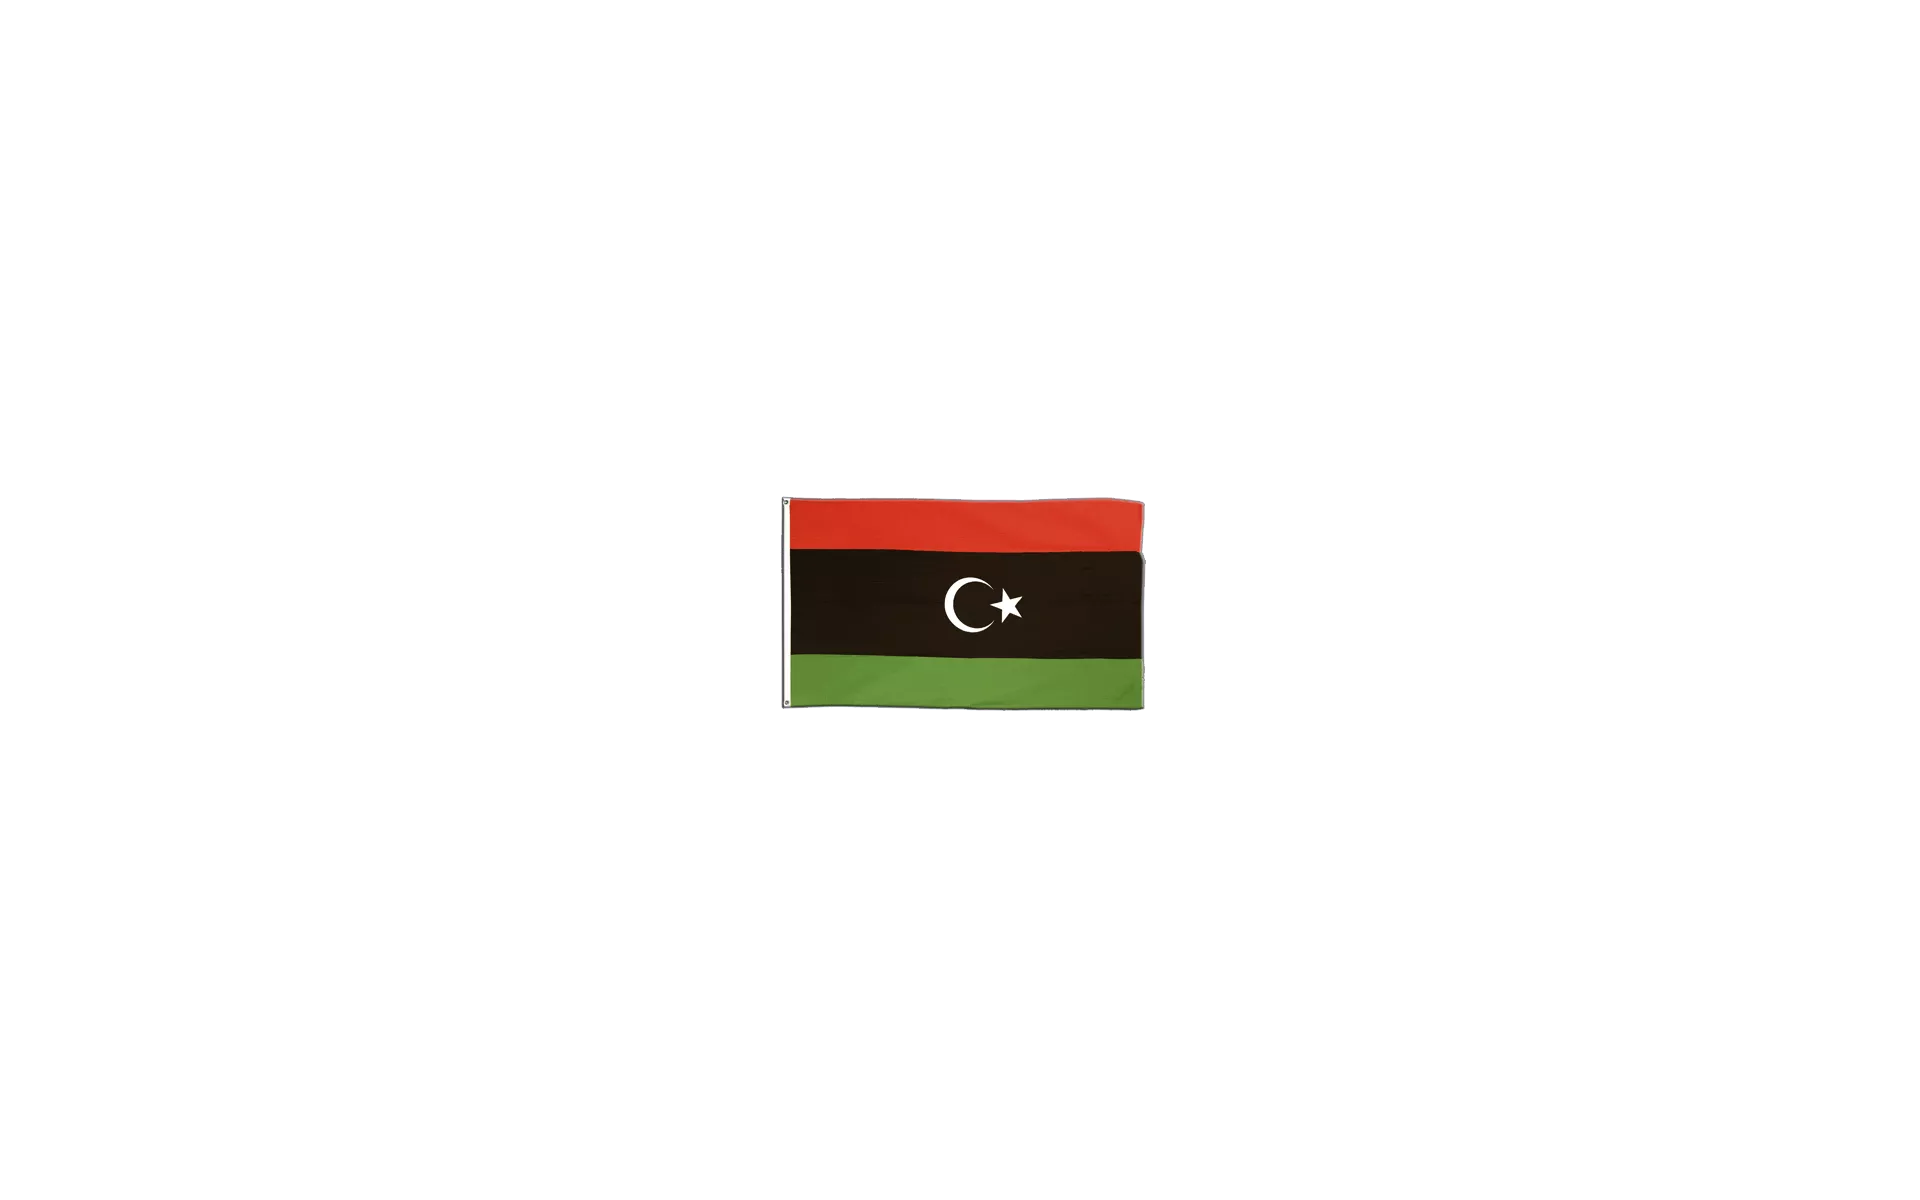 Auto-Fahne: Libyen - Premiumqualität, 9,95 €